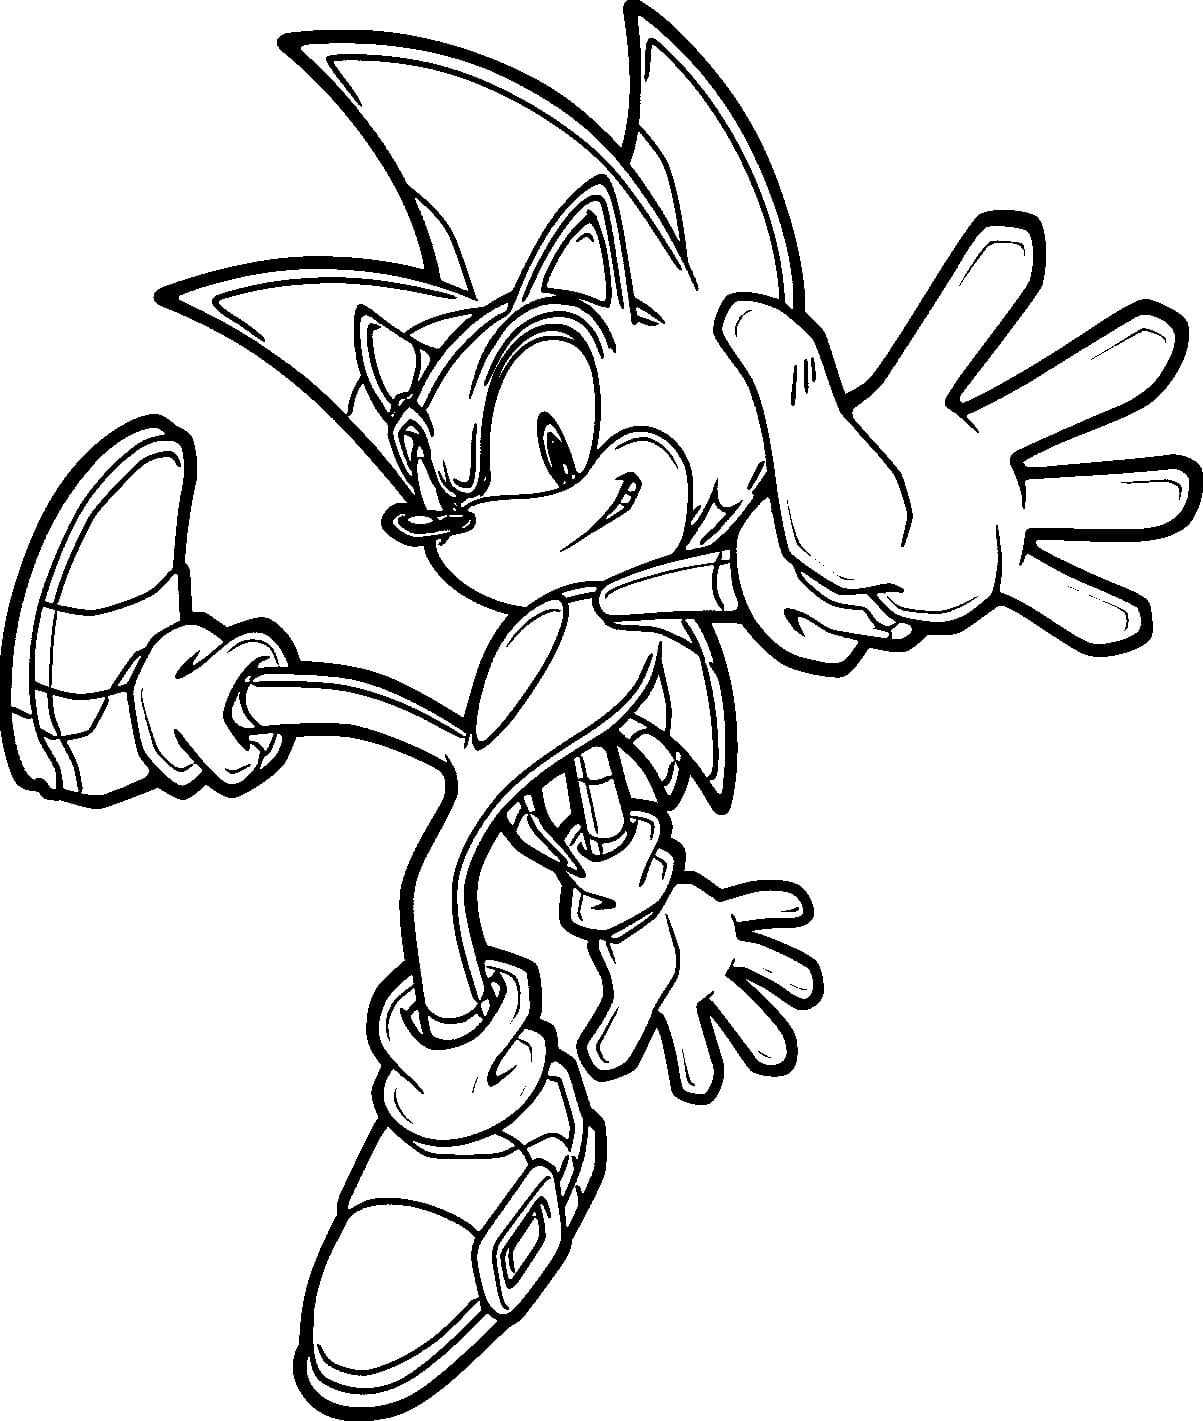 Dibujos Para Colorear Sonic Im Genes Imprime Gratis Para Ni Os